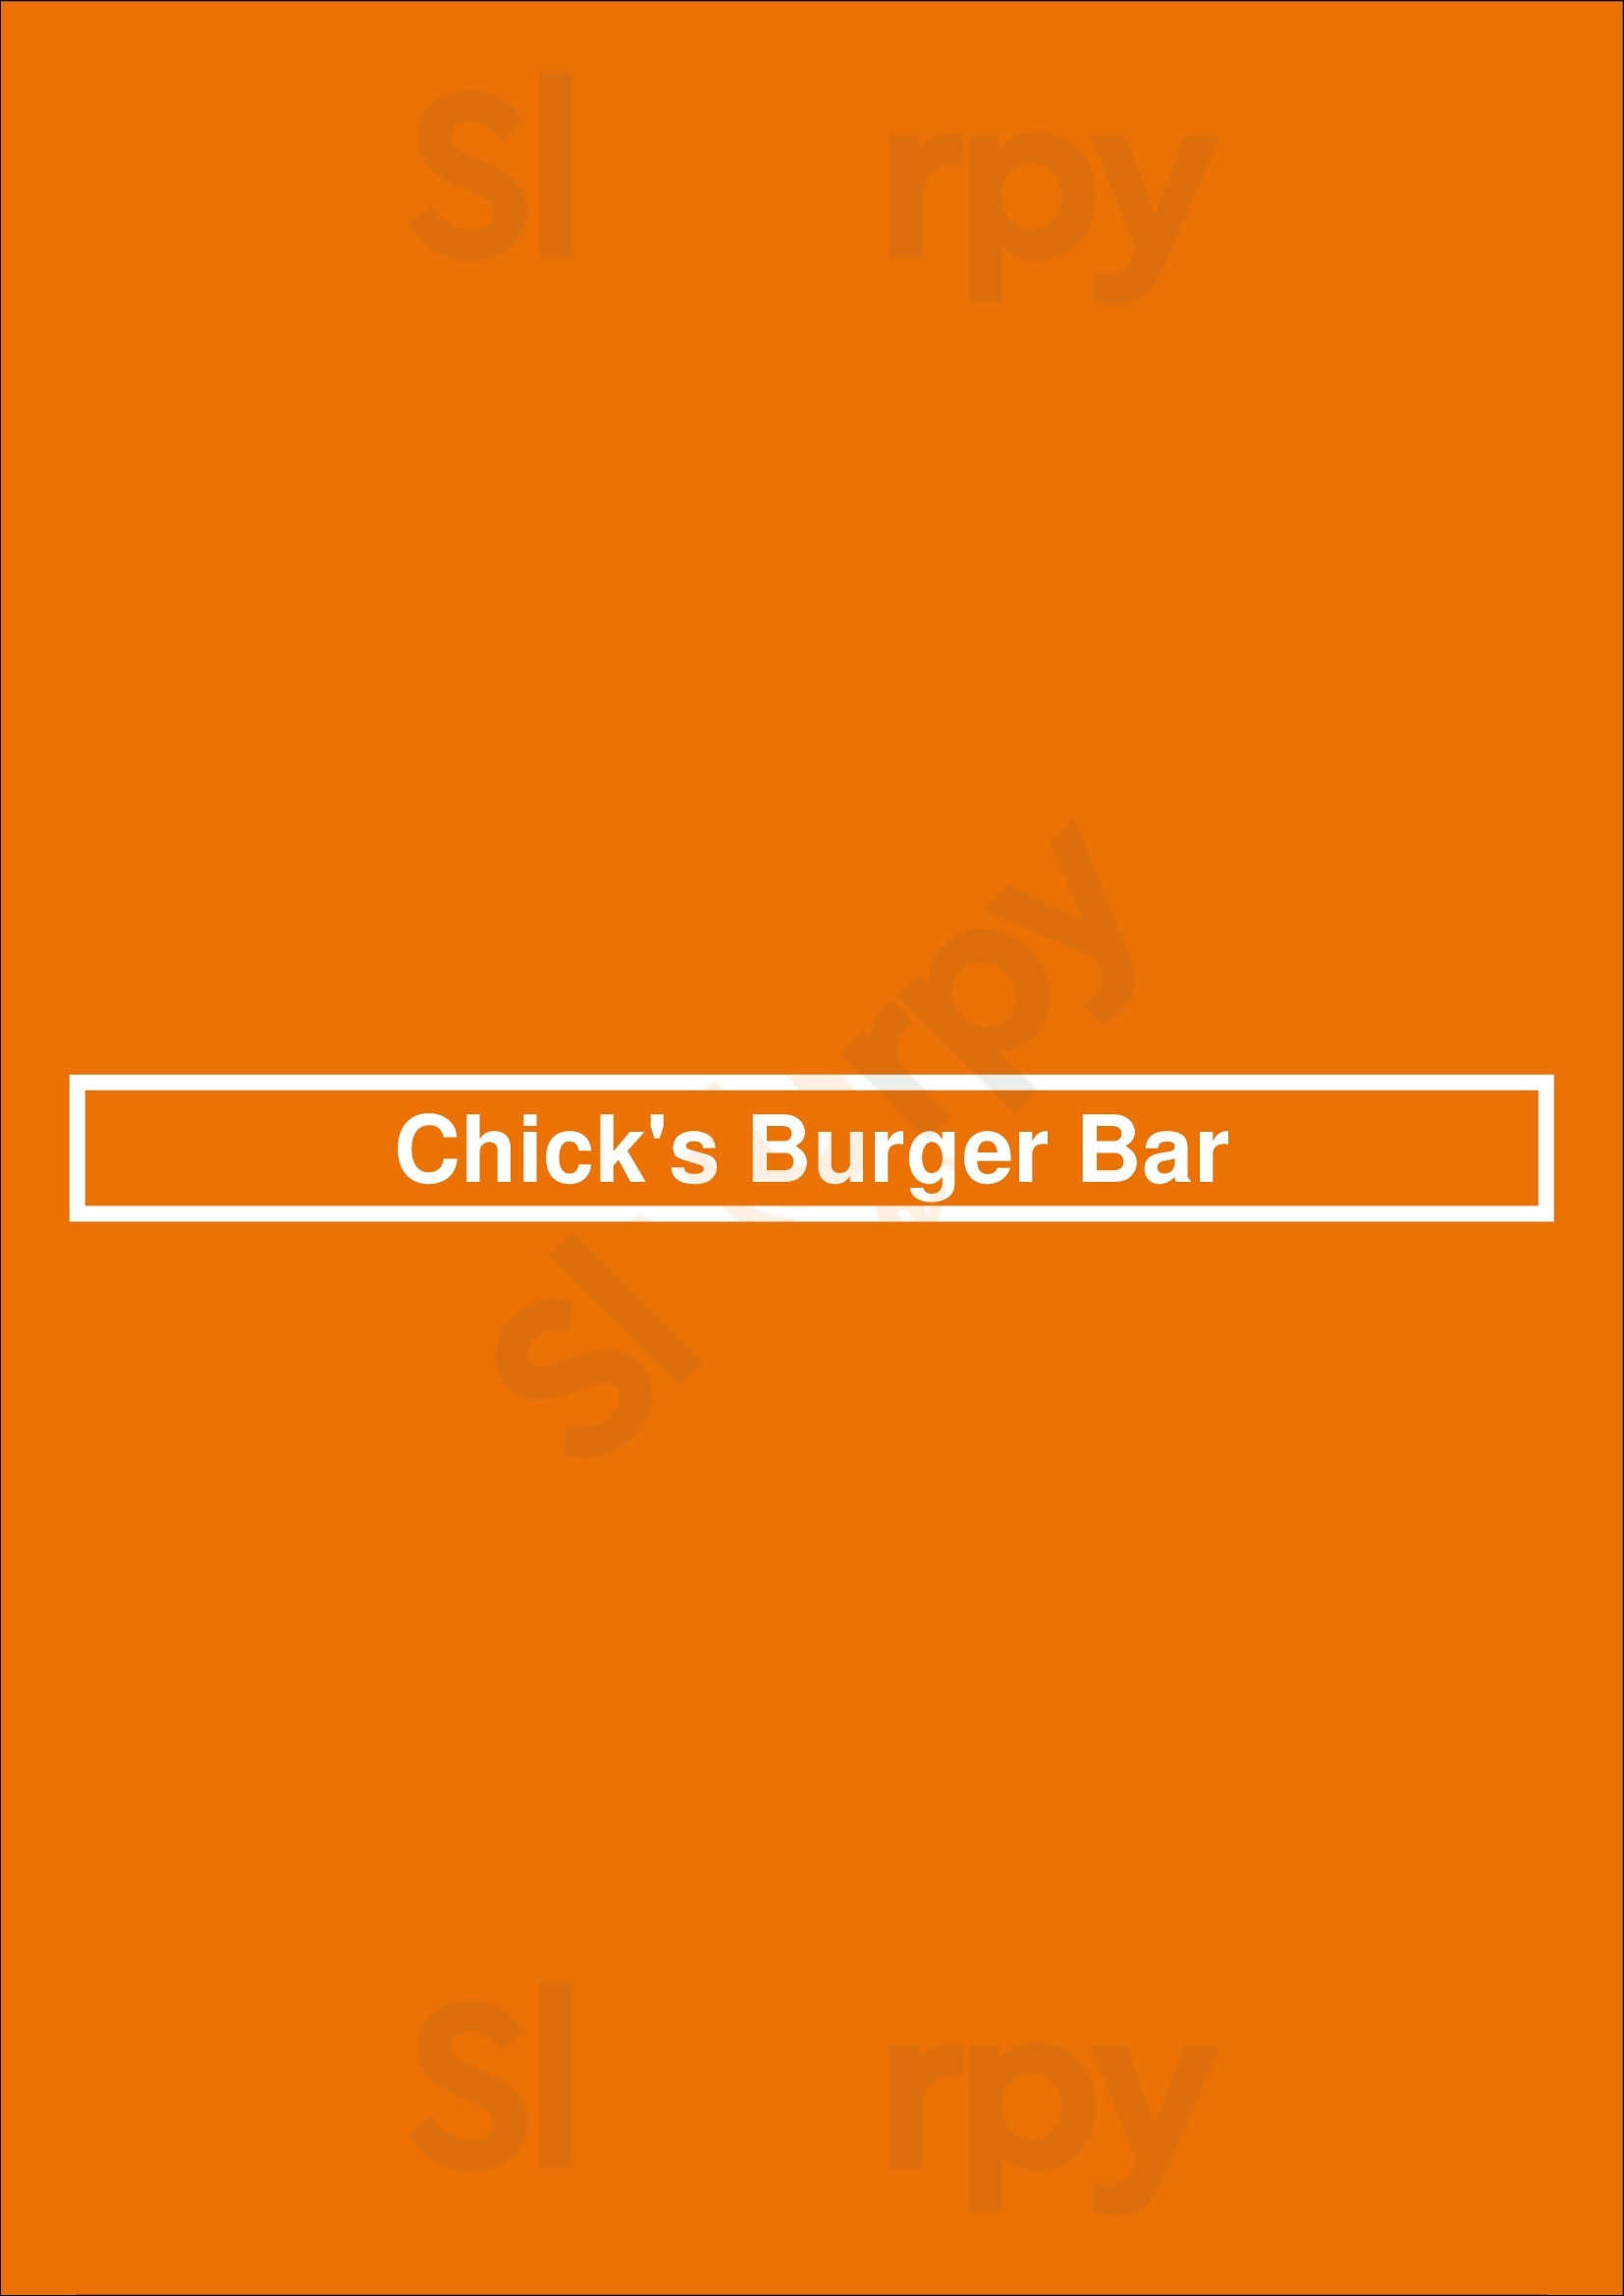 Chick's Burger Bar Barcelona Menu - 1